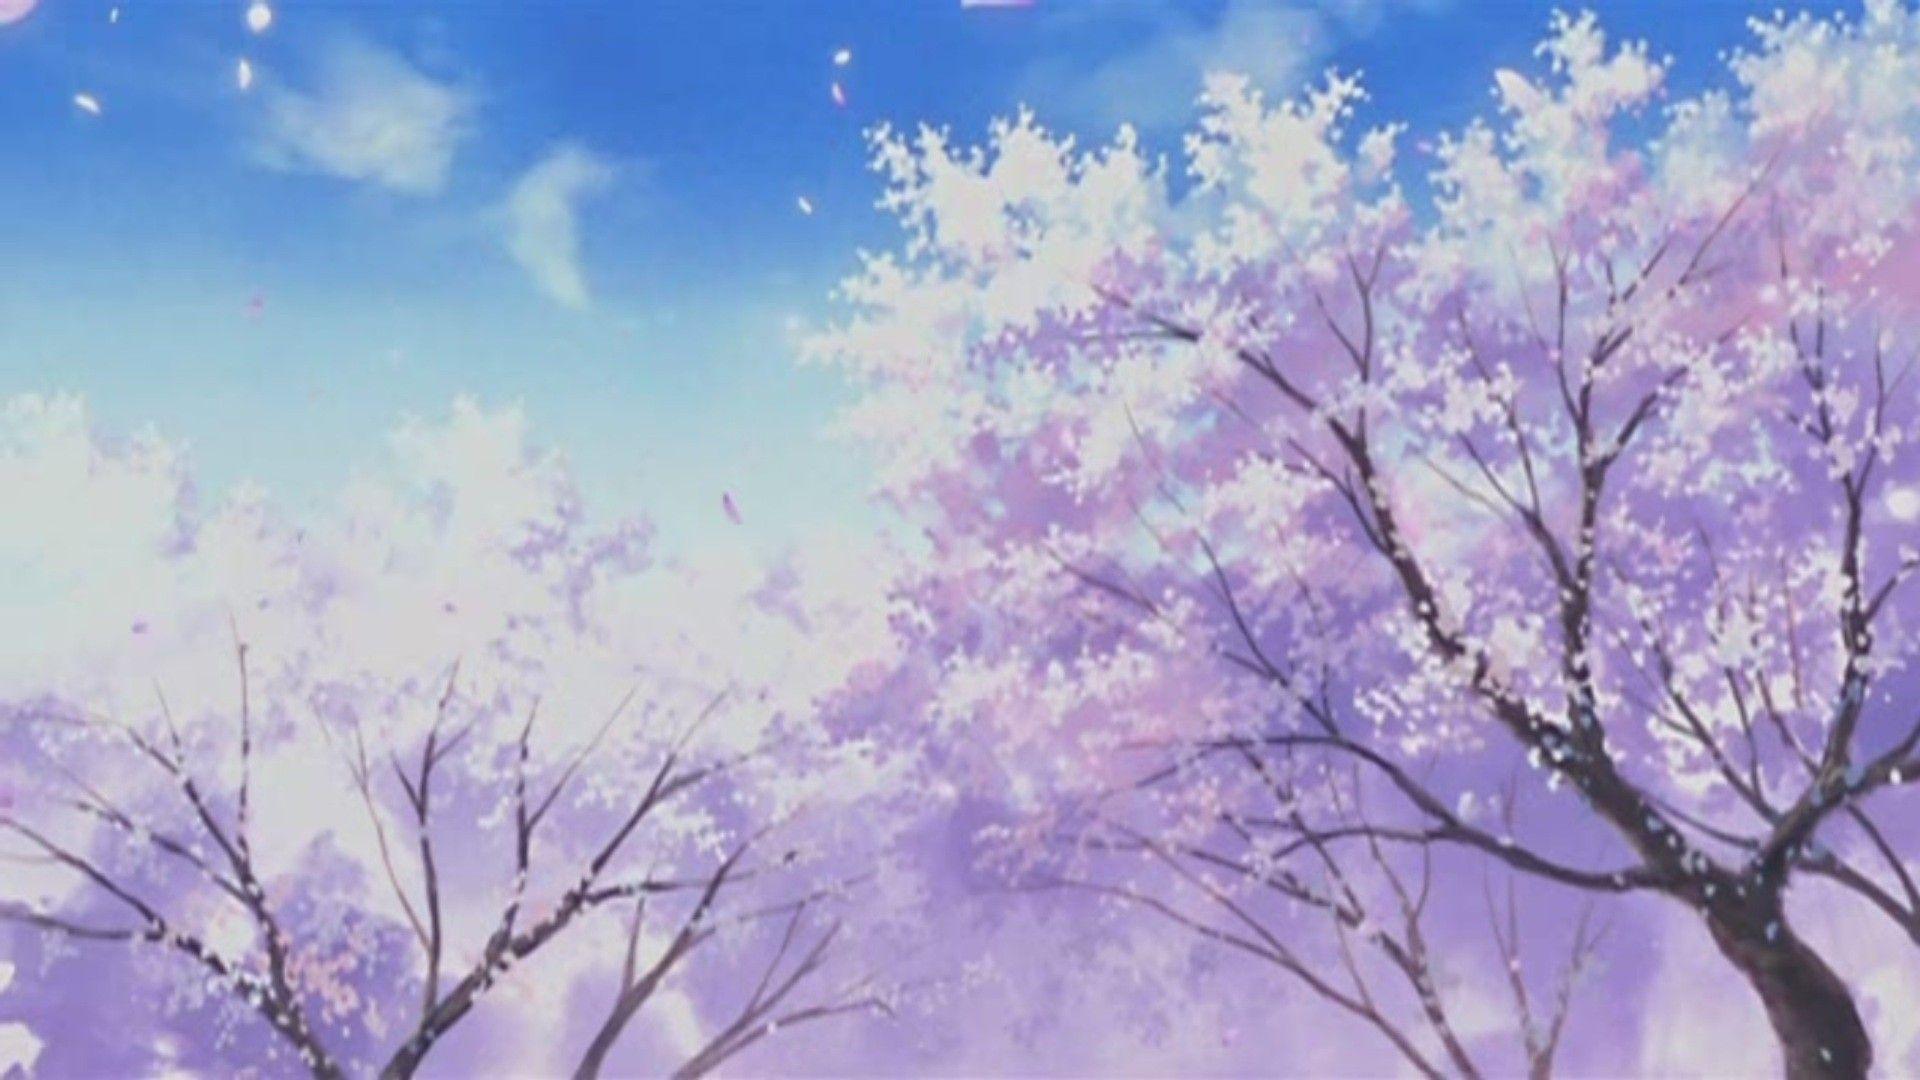 35 Pastel Aesthetic Anime Hd Wallpapers Desktop Background